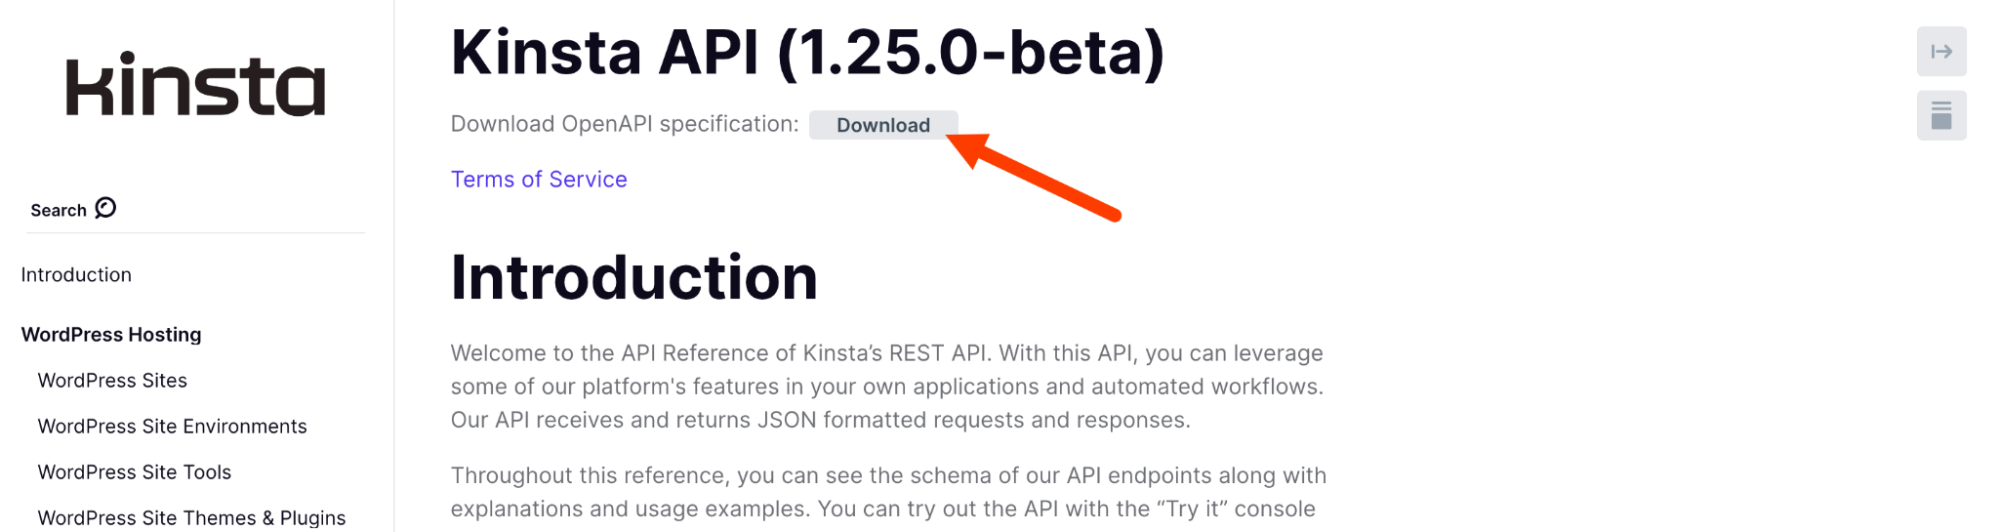 Kinsta API OpenAPI-Spezifikation.